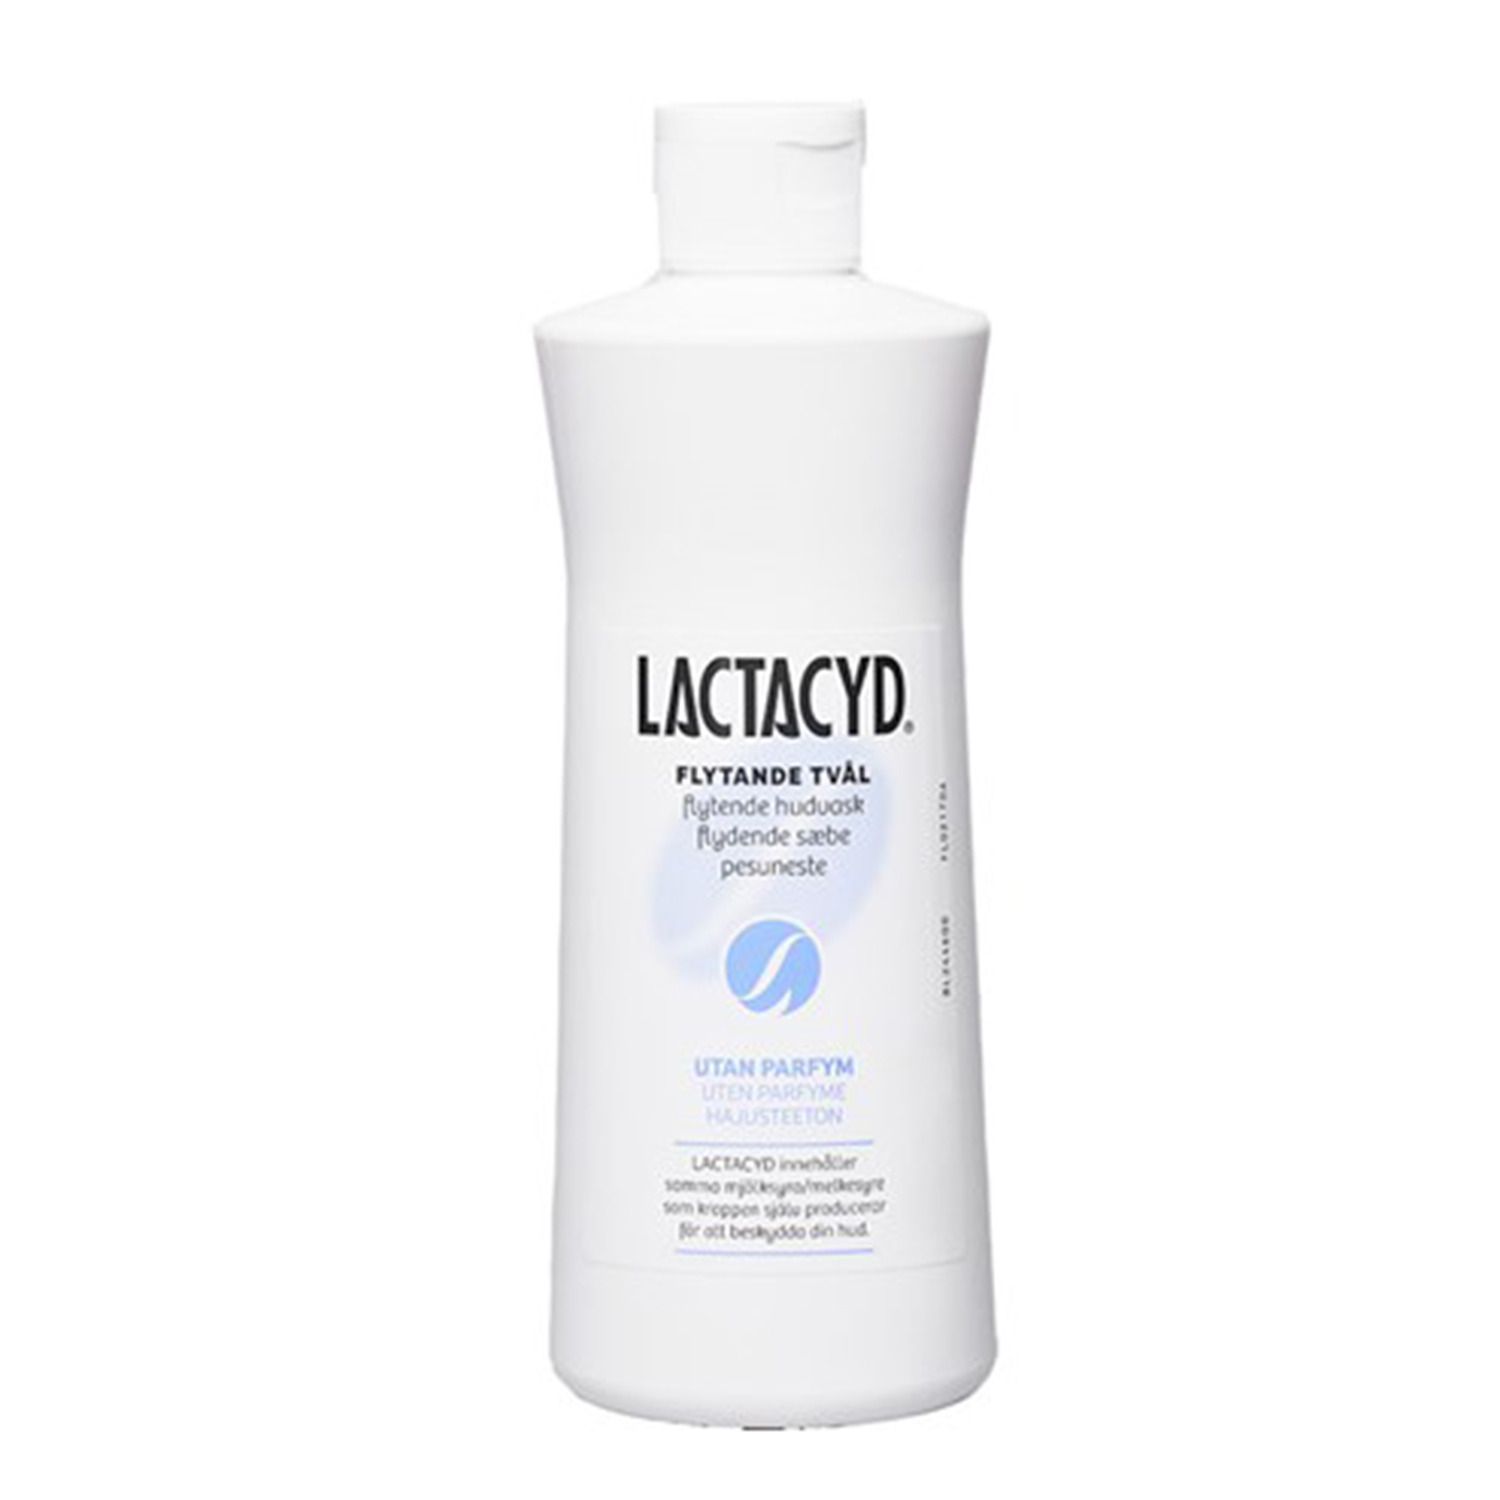 Lactacyd 500ml